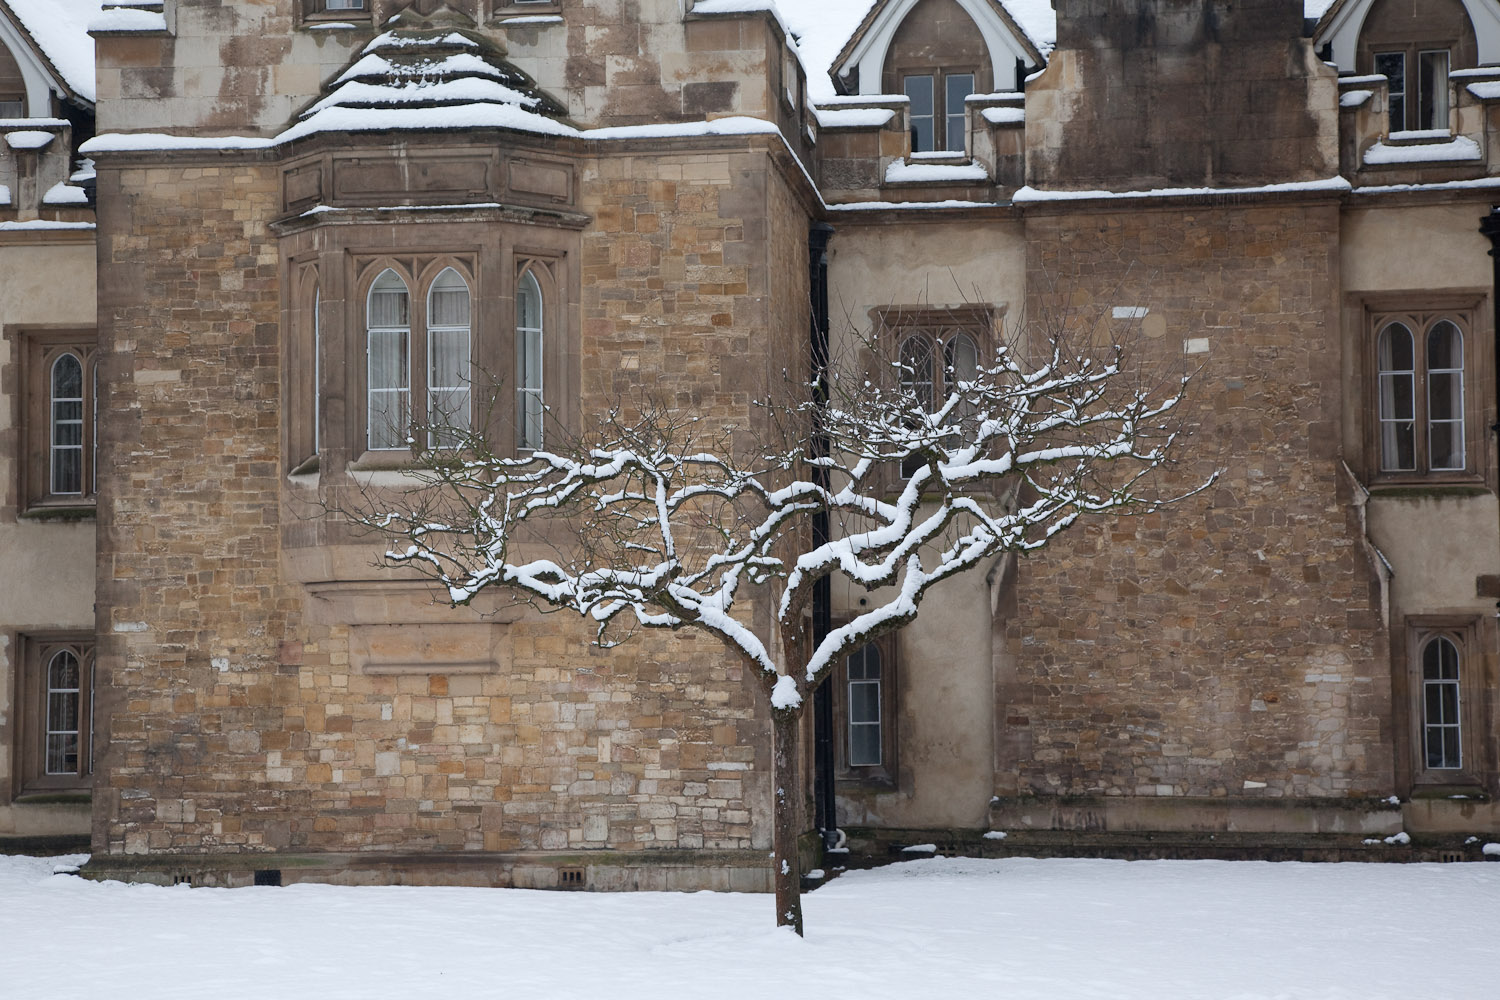 Cambridge in snow